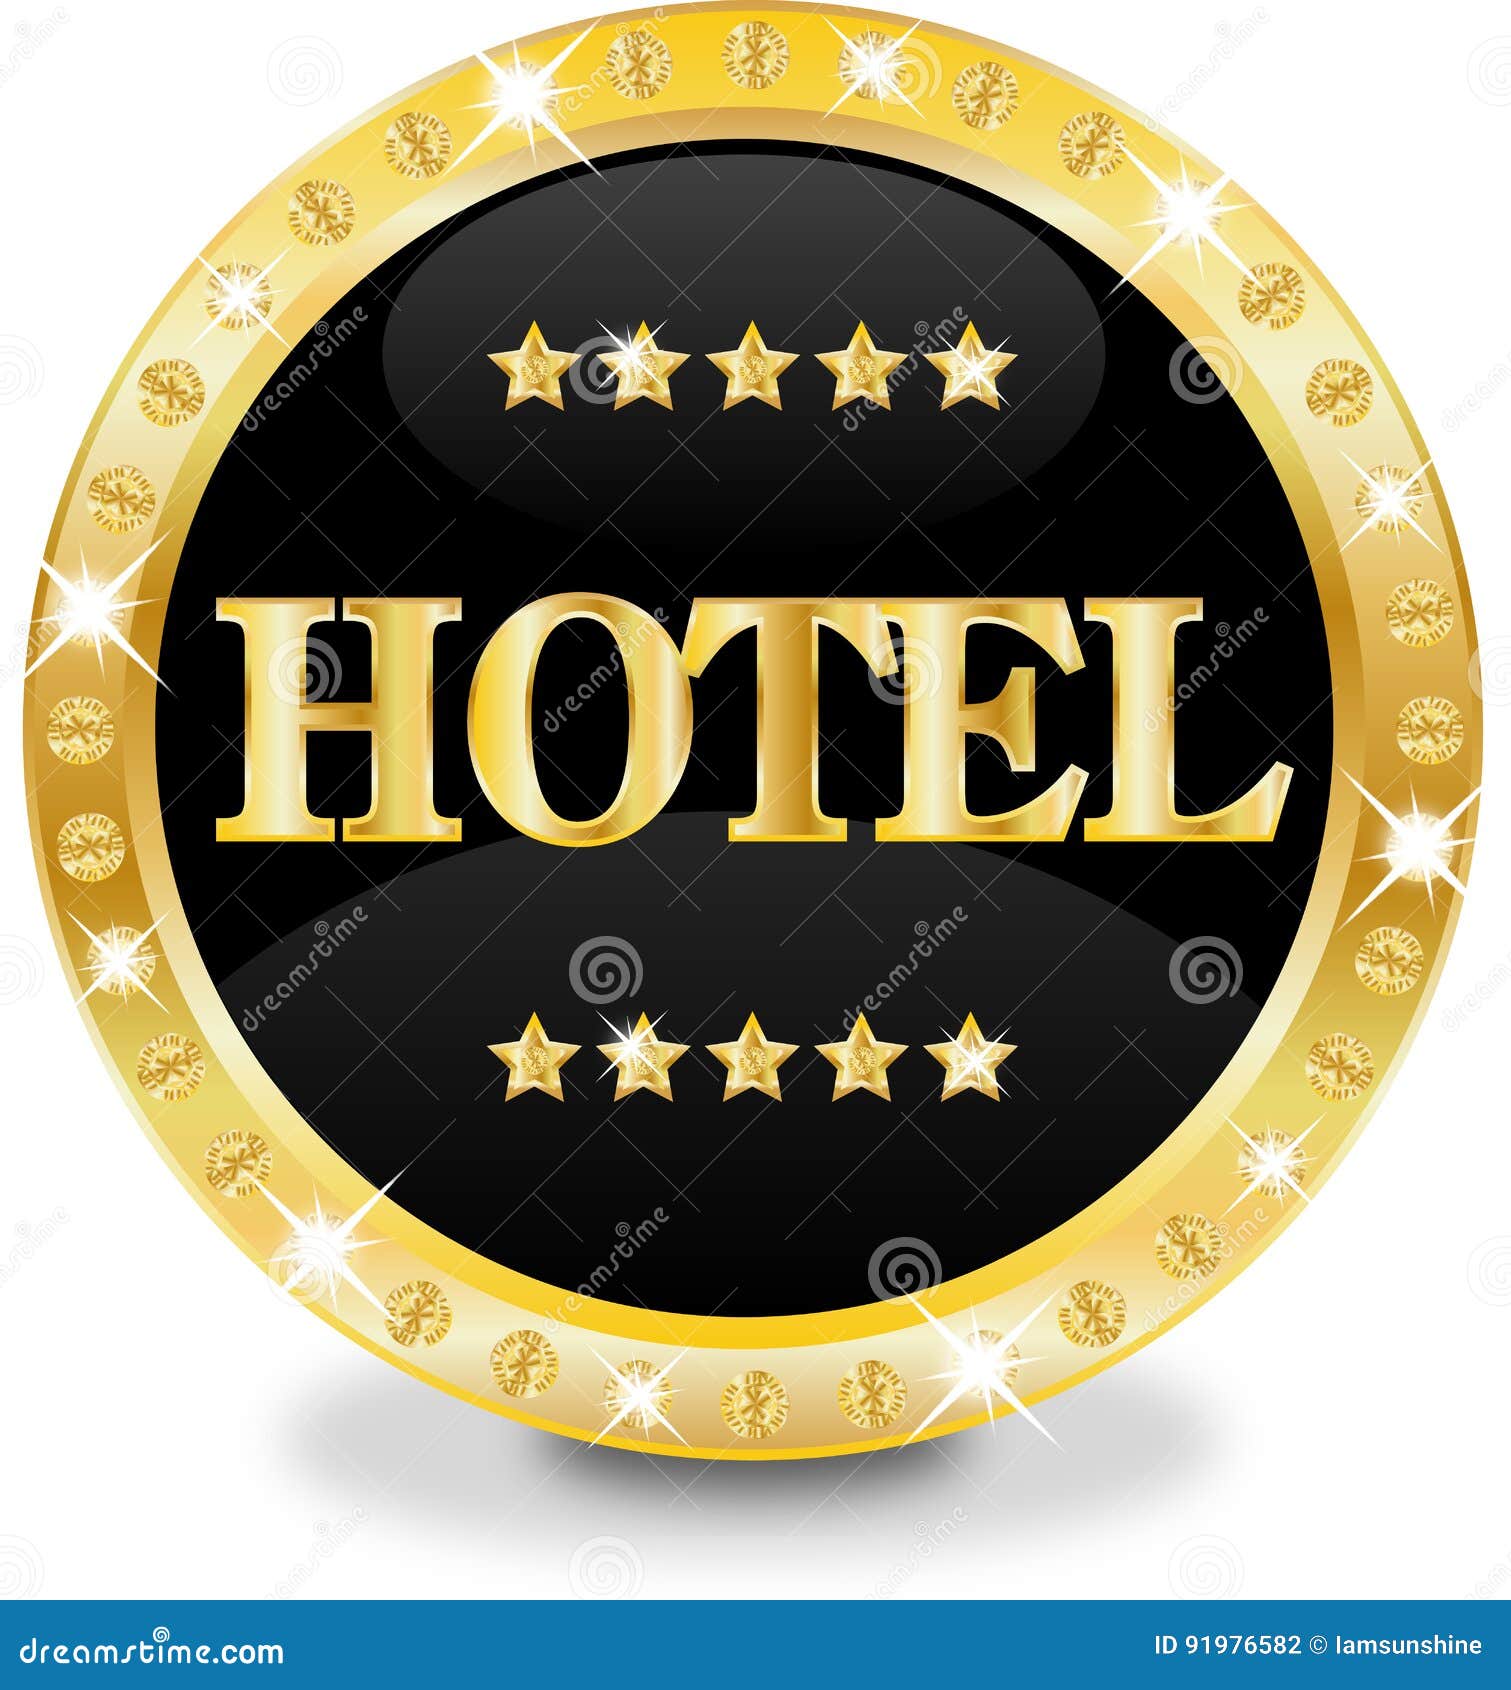 Hotel banner stock illustration. Illustration of premium - 91976582